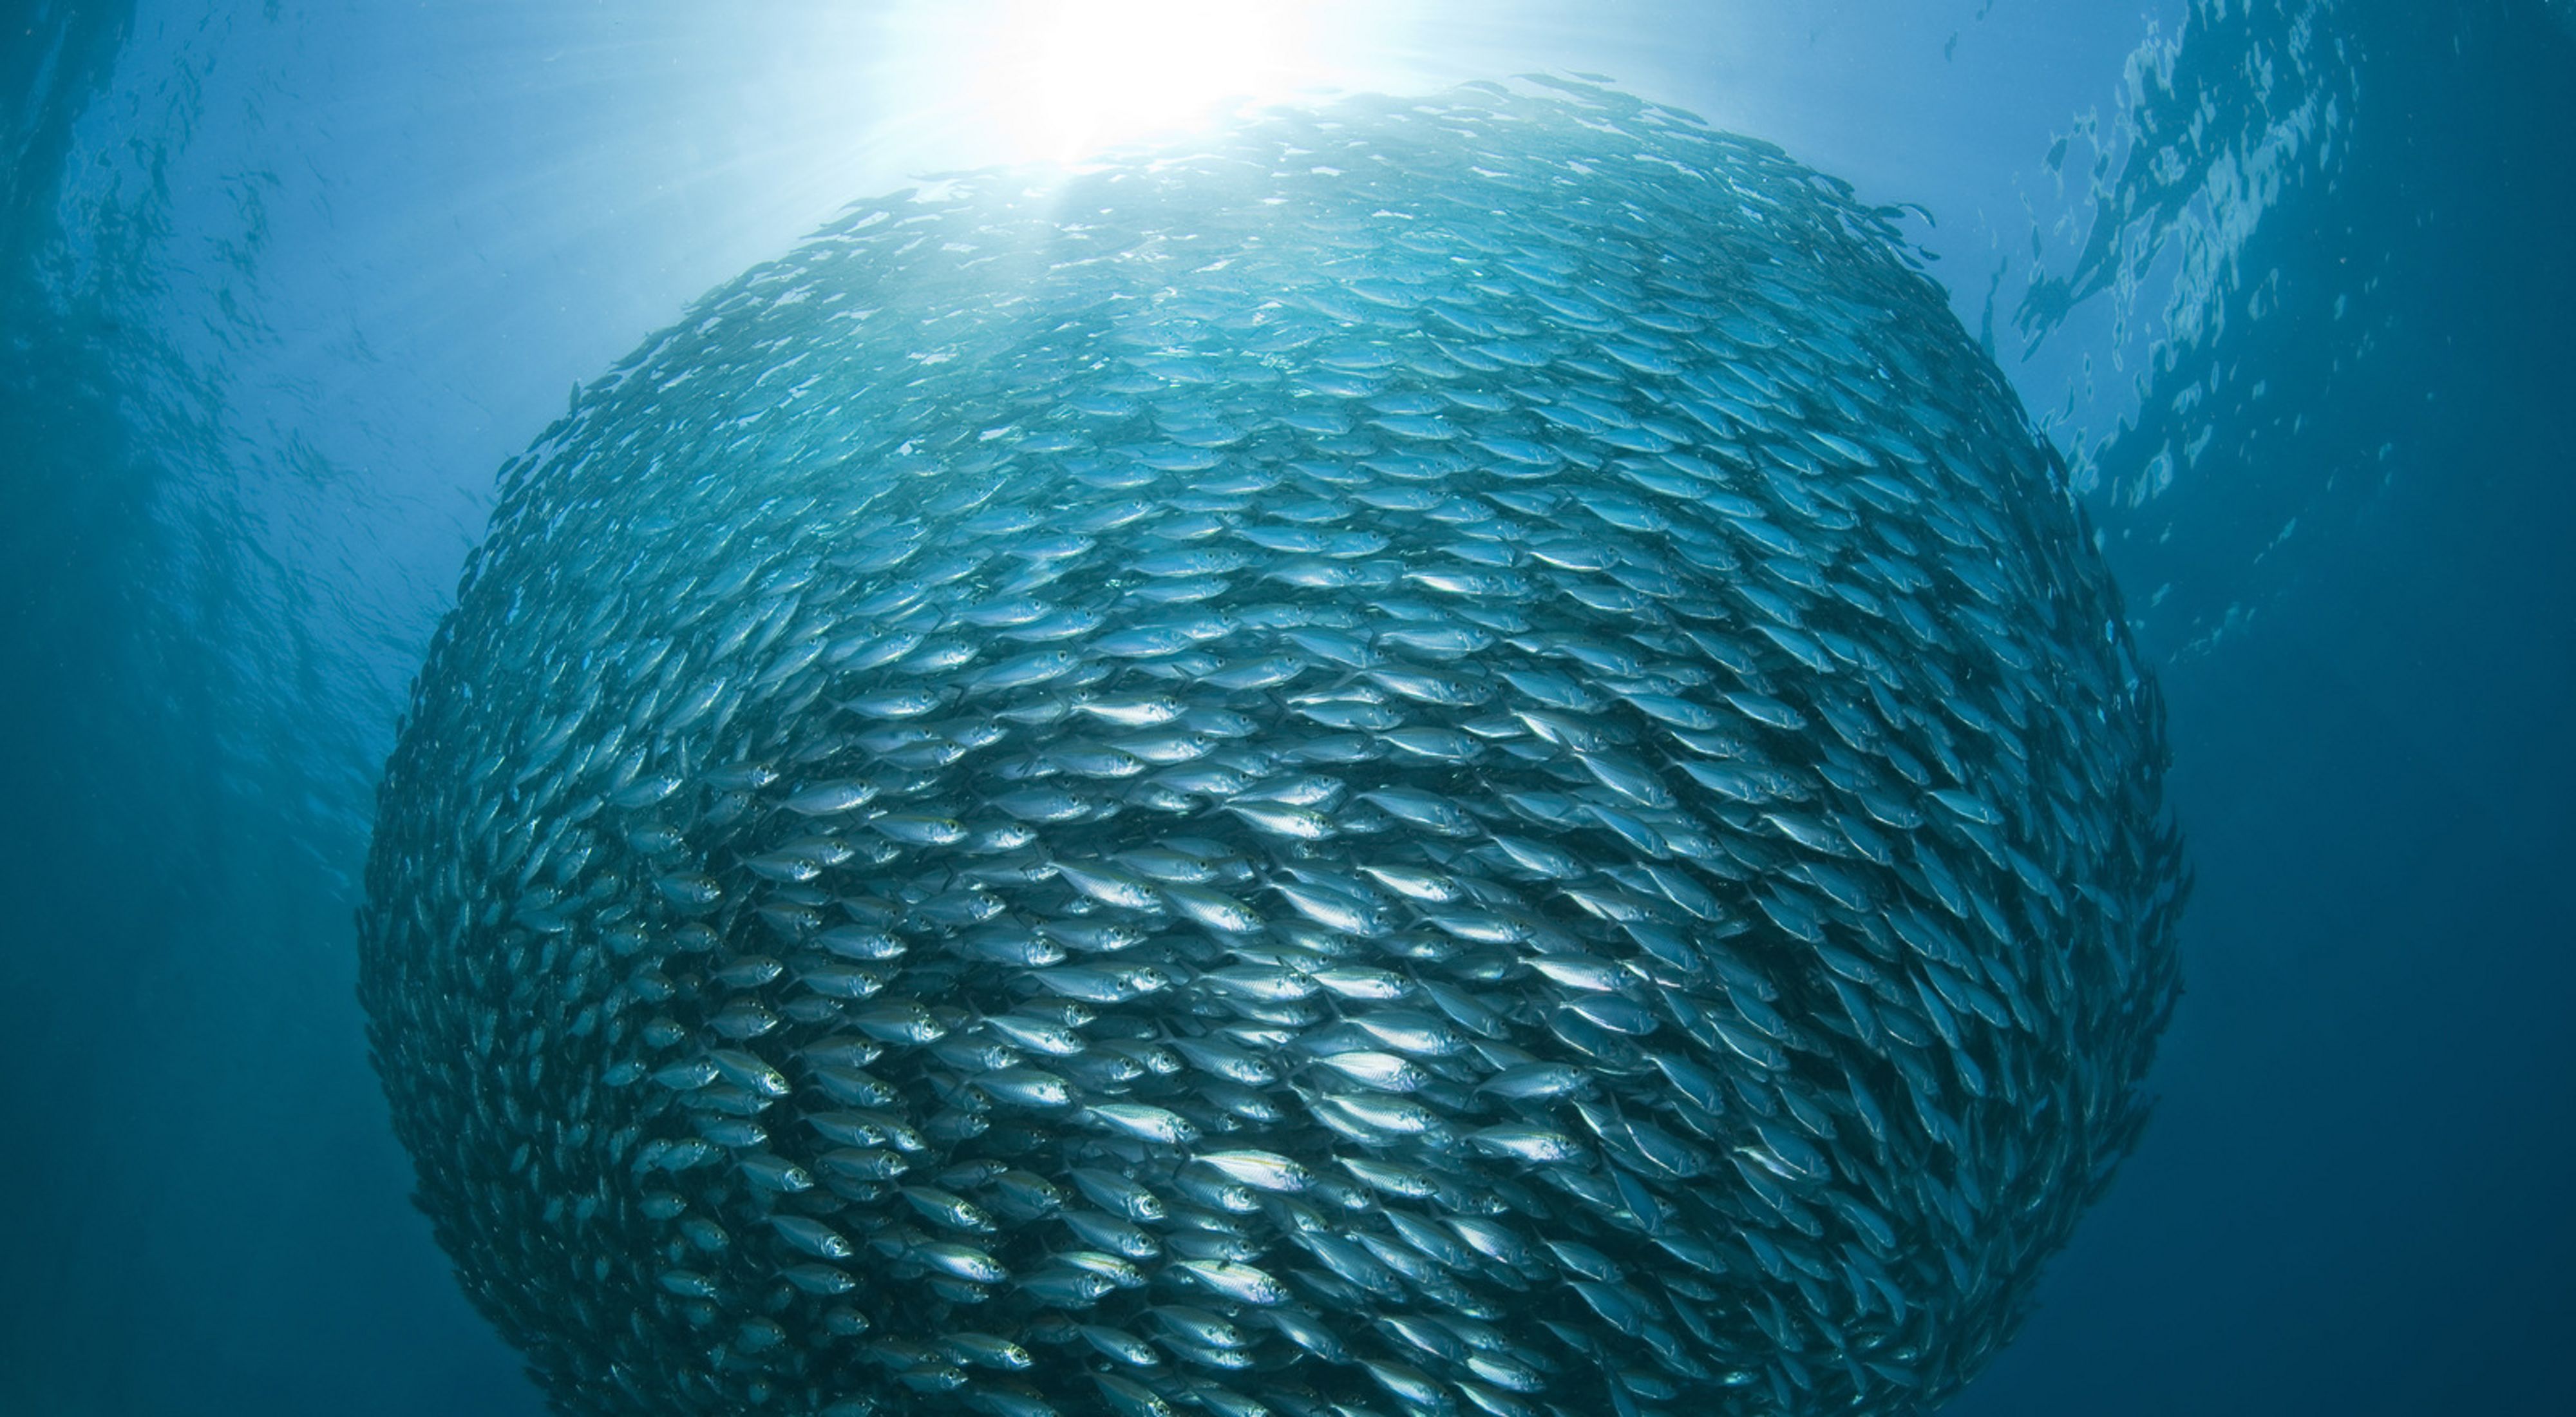 Large school of silver fish swirls overhead